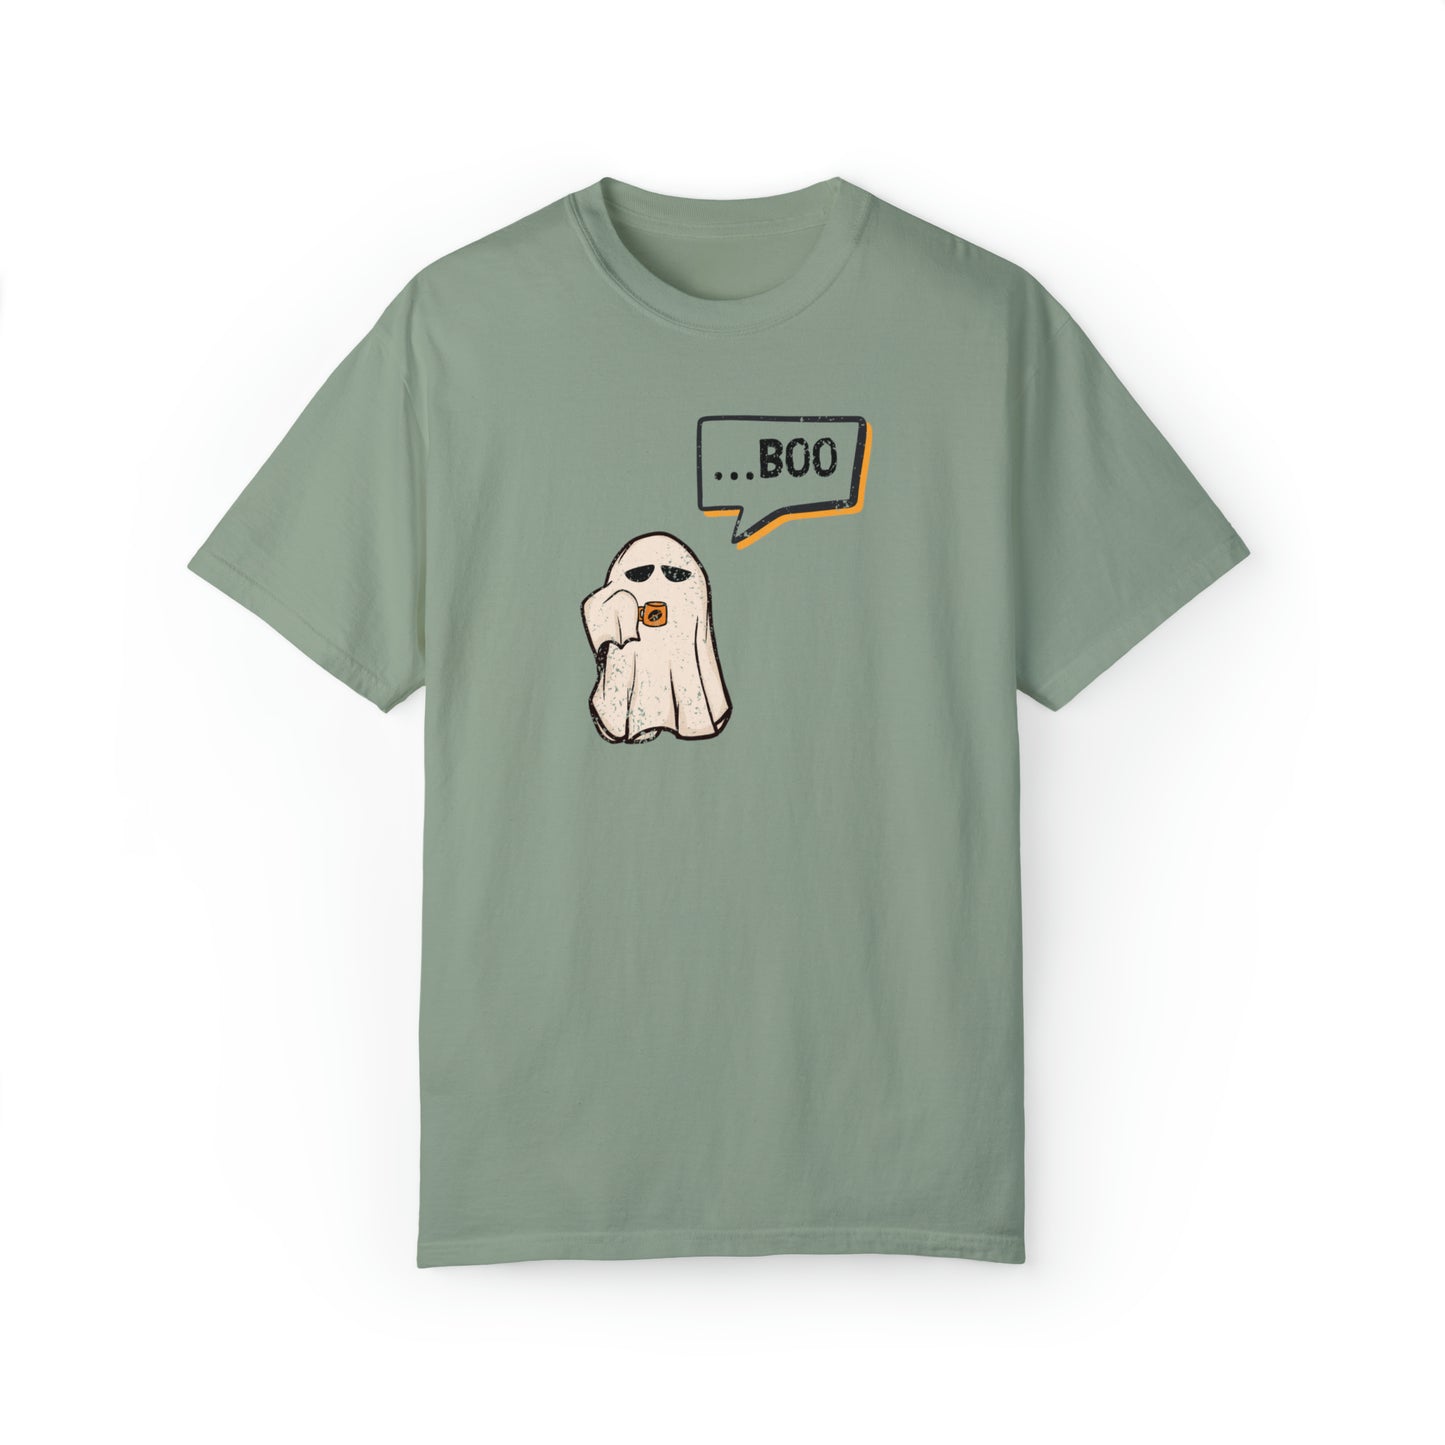 Need Coffee T-Shirt, Halloween Ghost Shirt, Sarcastic Funny Halloween Shirt, Not a Morning Person, Grumpy Mom Shirt, Gift for Mom, Mom Shirt